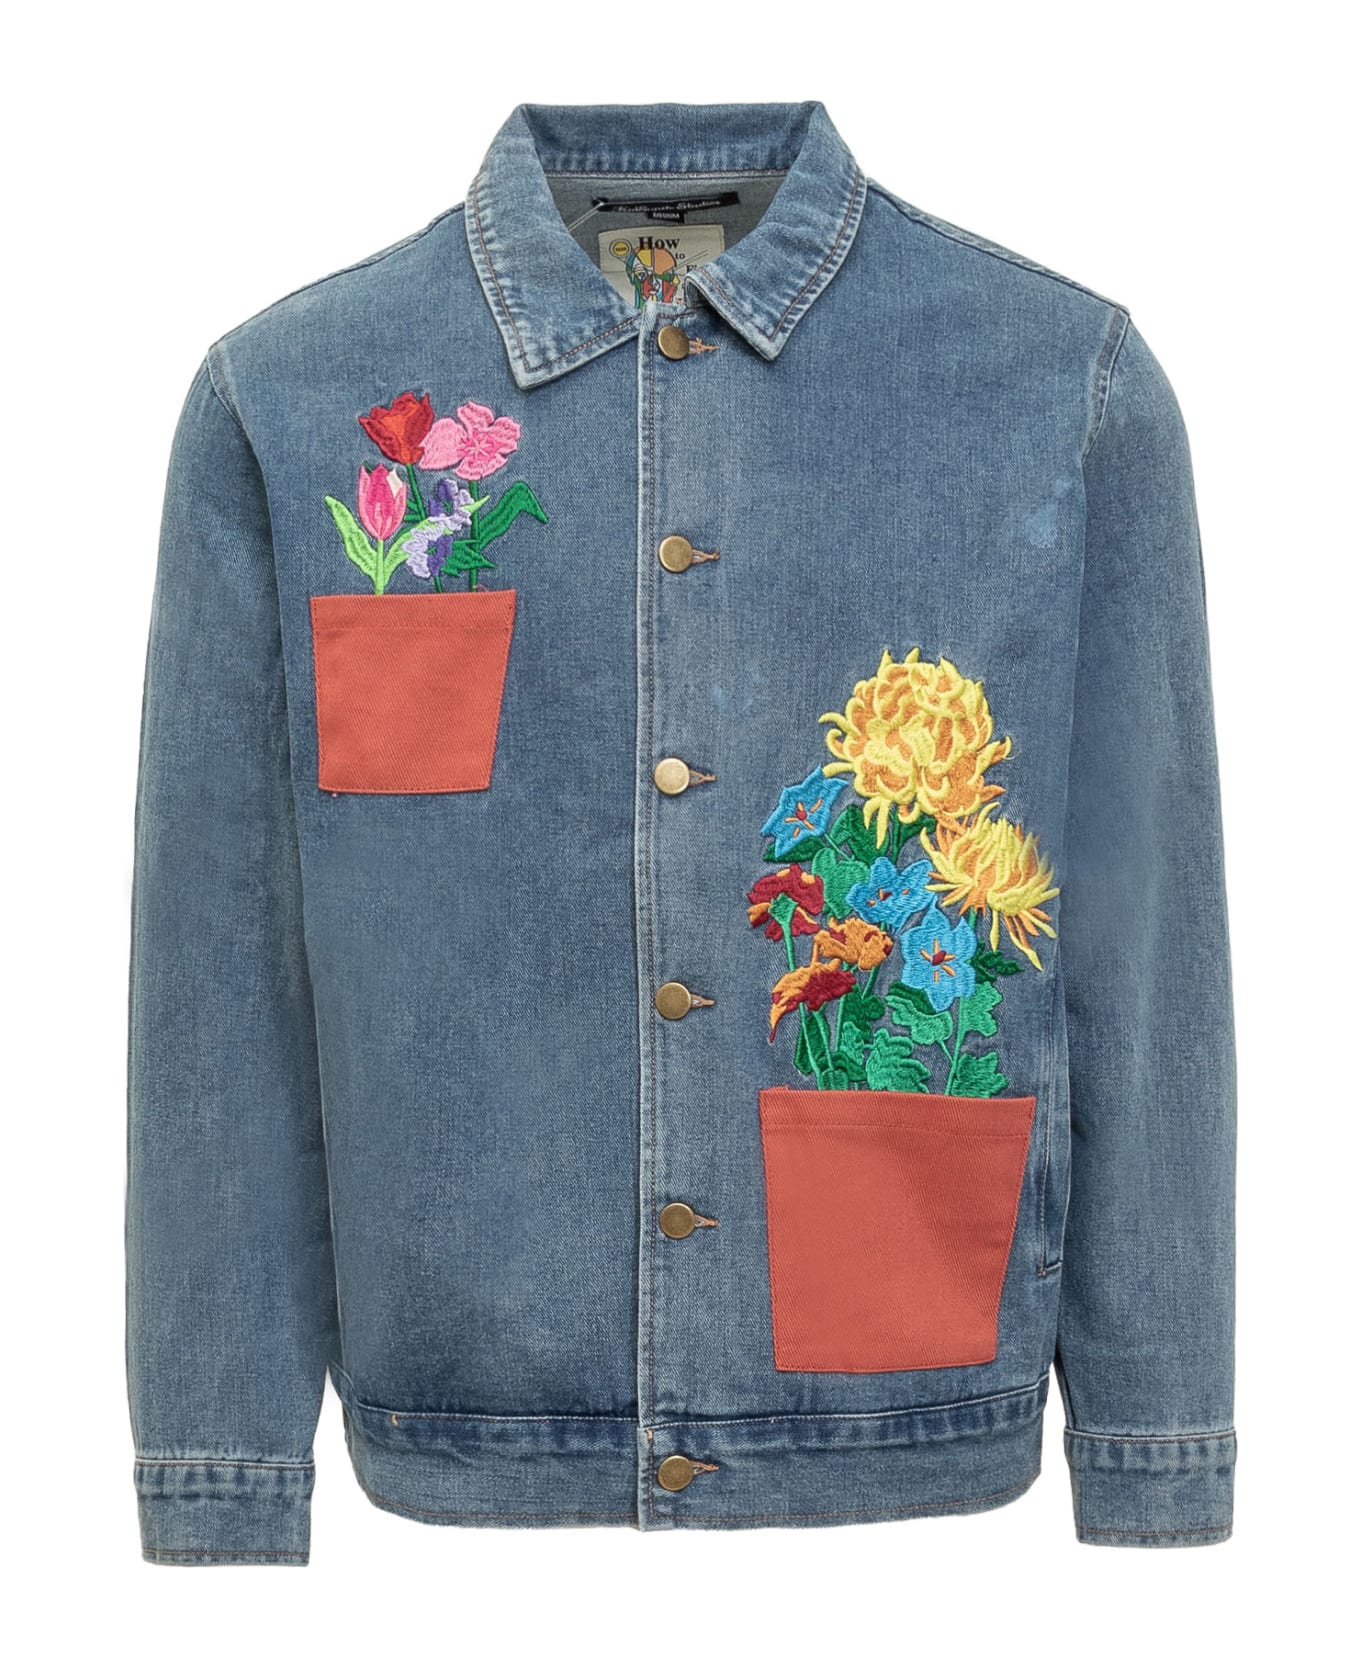 Kidsuper Flower Jacket - BLUE ジャケット